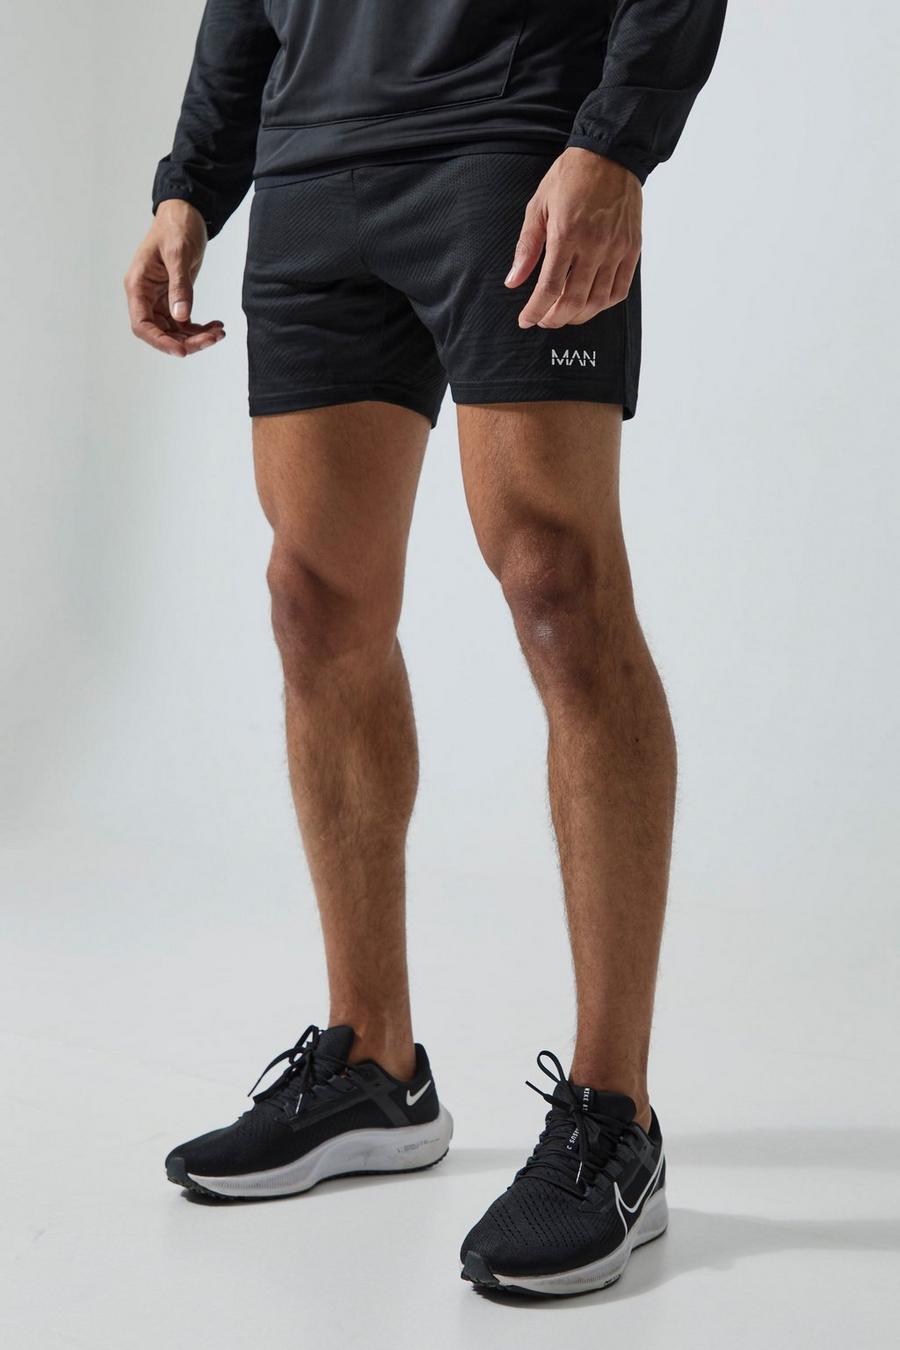 Men's Workout Shorts, Men's Gym Shorts